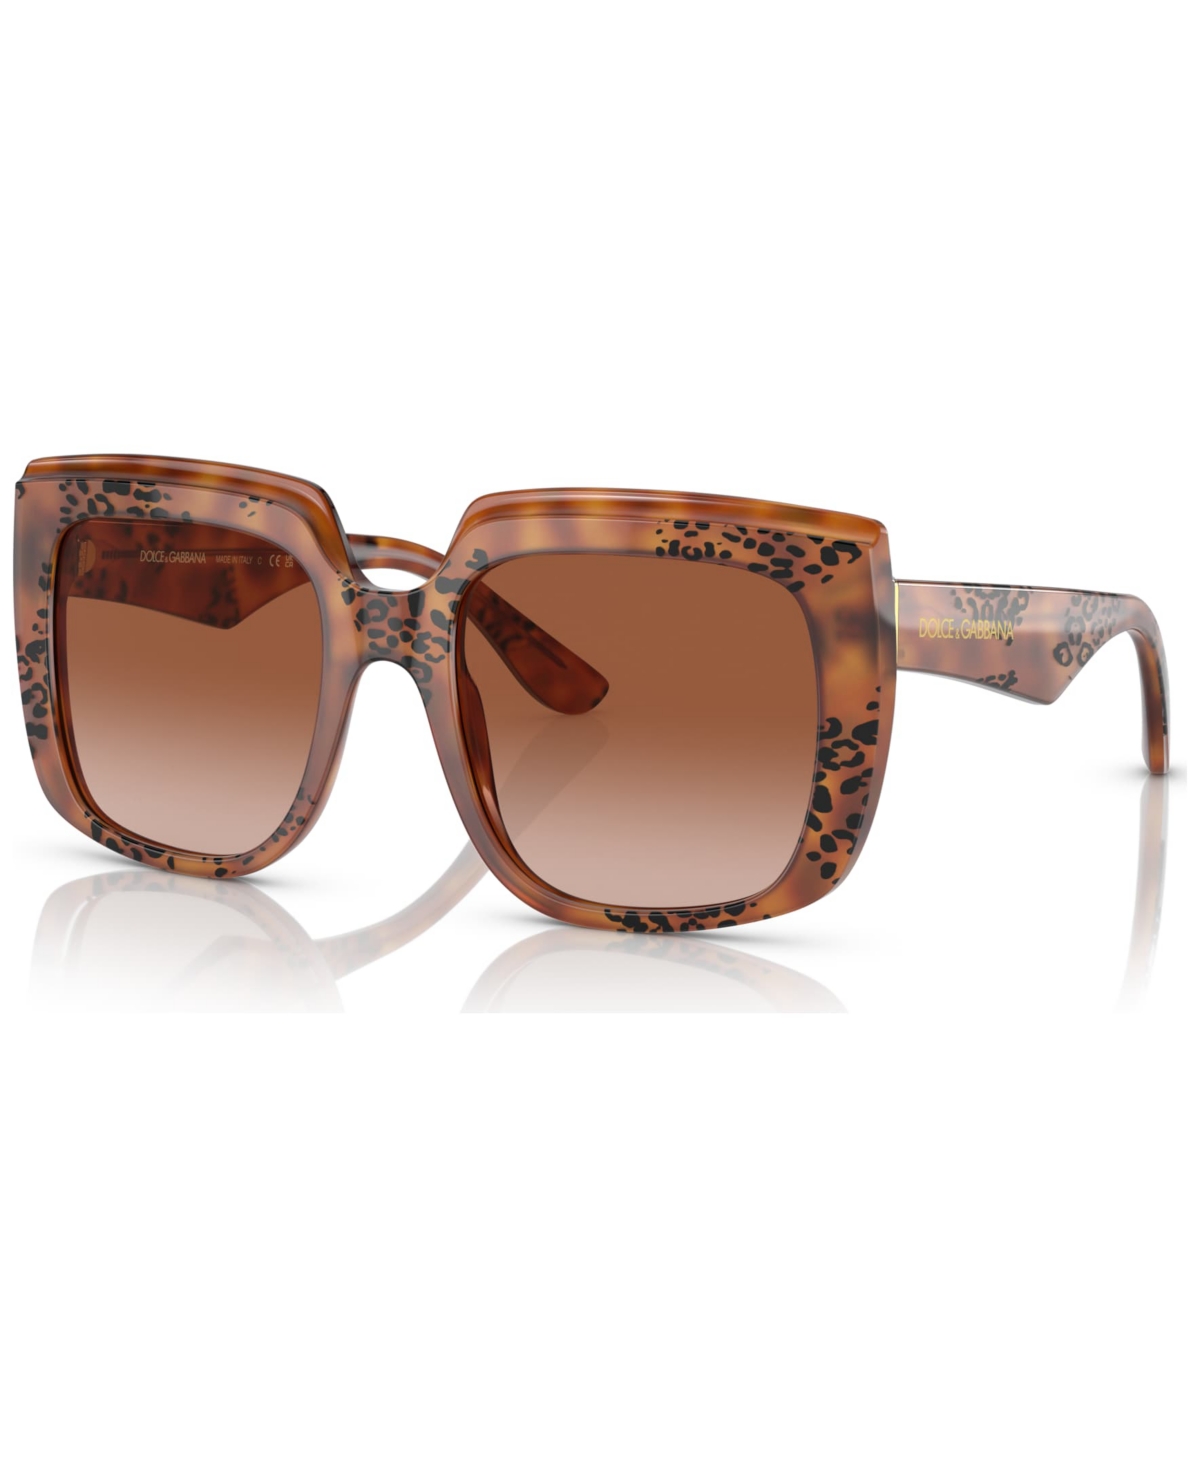 Dolce&Gabbana Women's Sunglasses, DG4414 - Havana